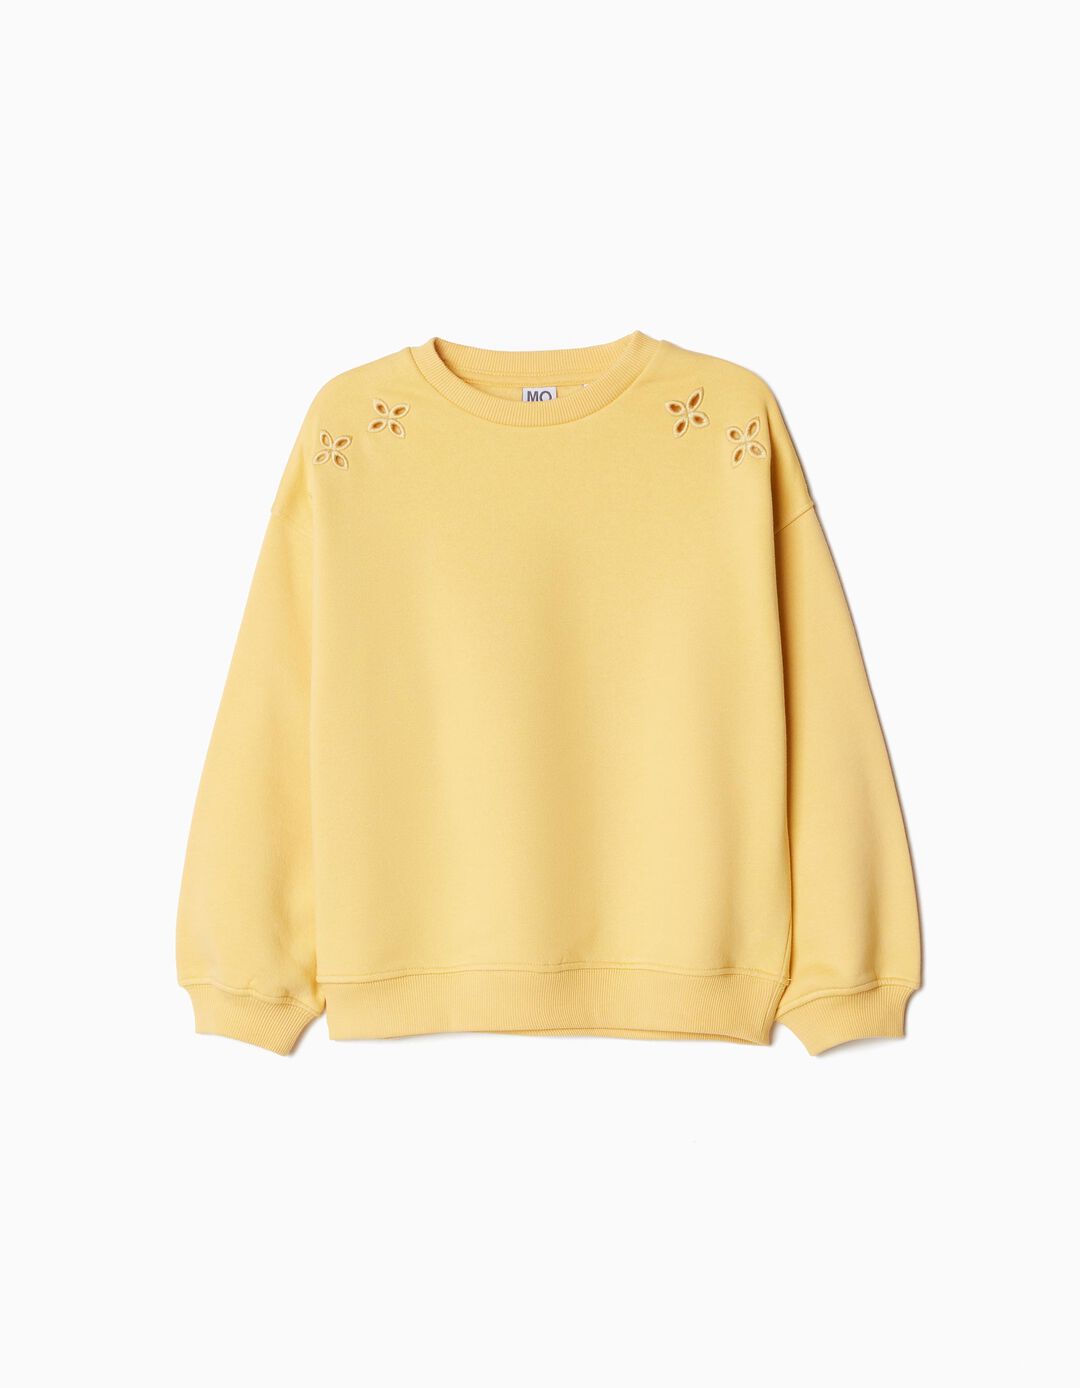 Sweatshirt de Felpa Bordado, Menina, Amarelo Claro